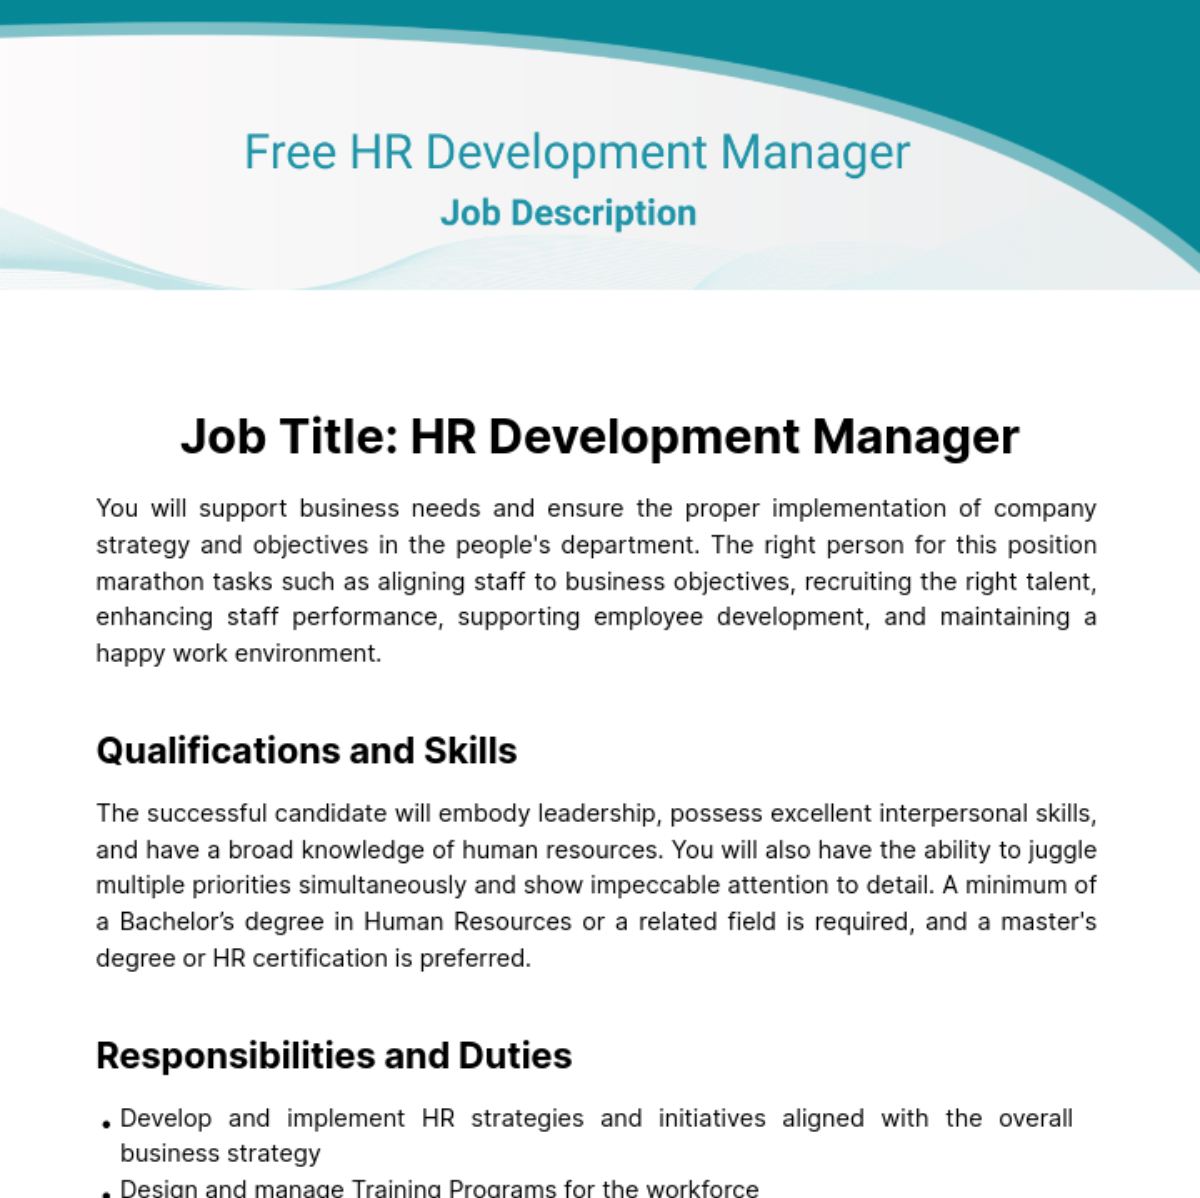 Human Resources (HR) Development Manager Job Description Template